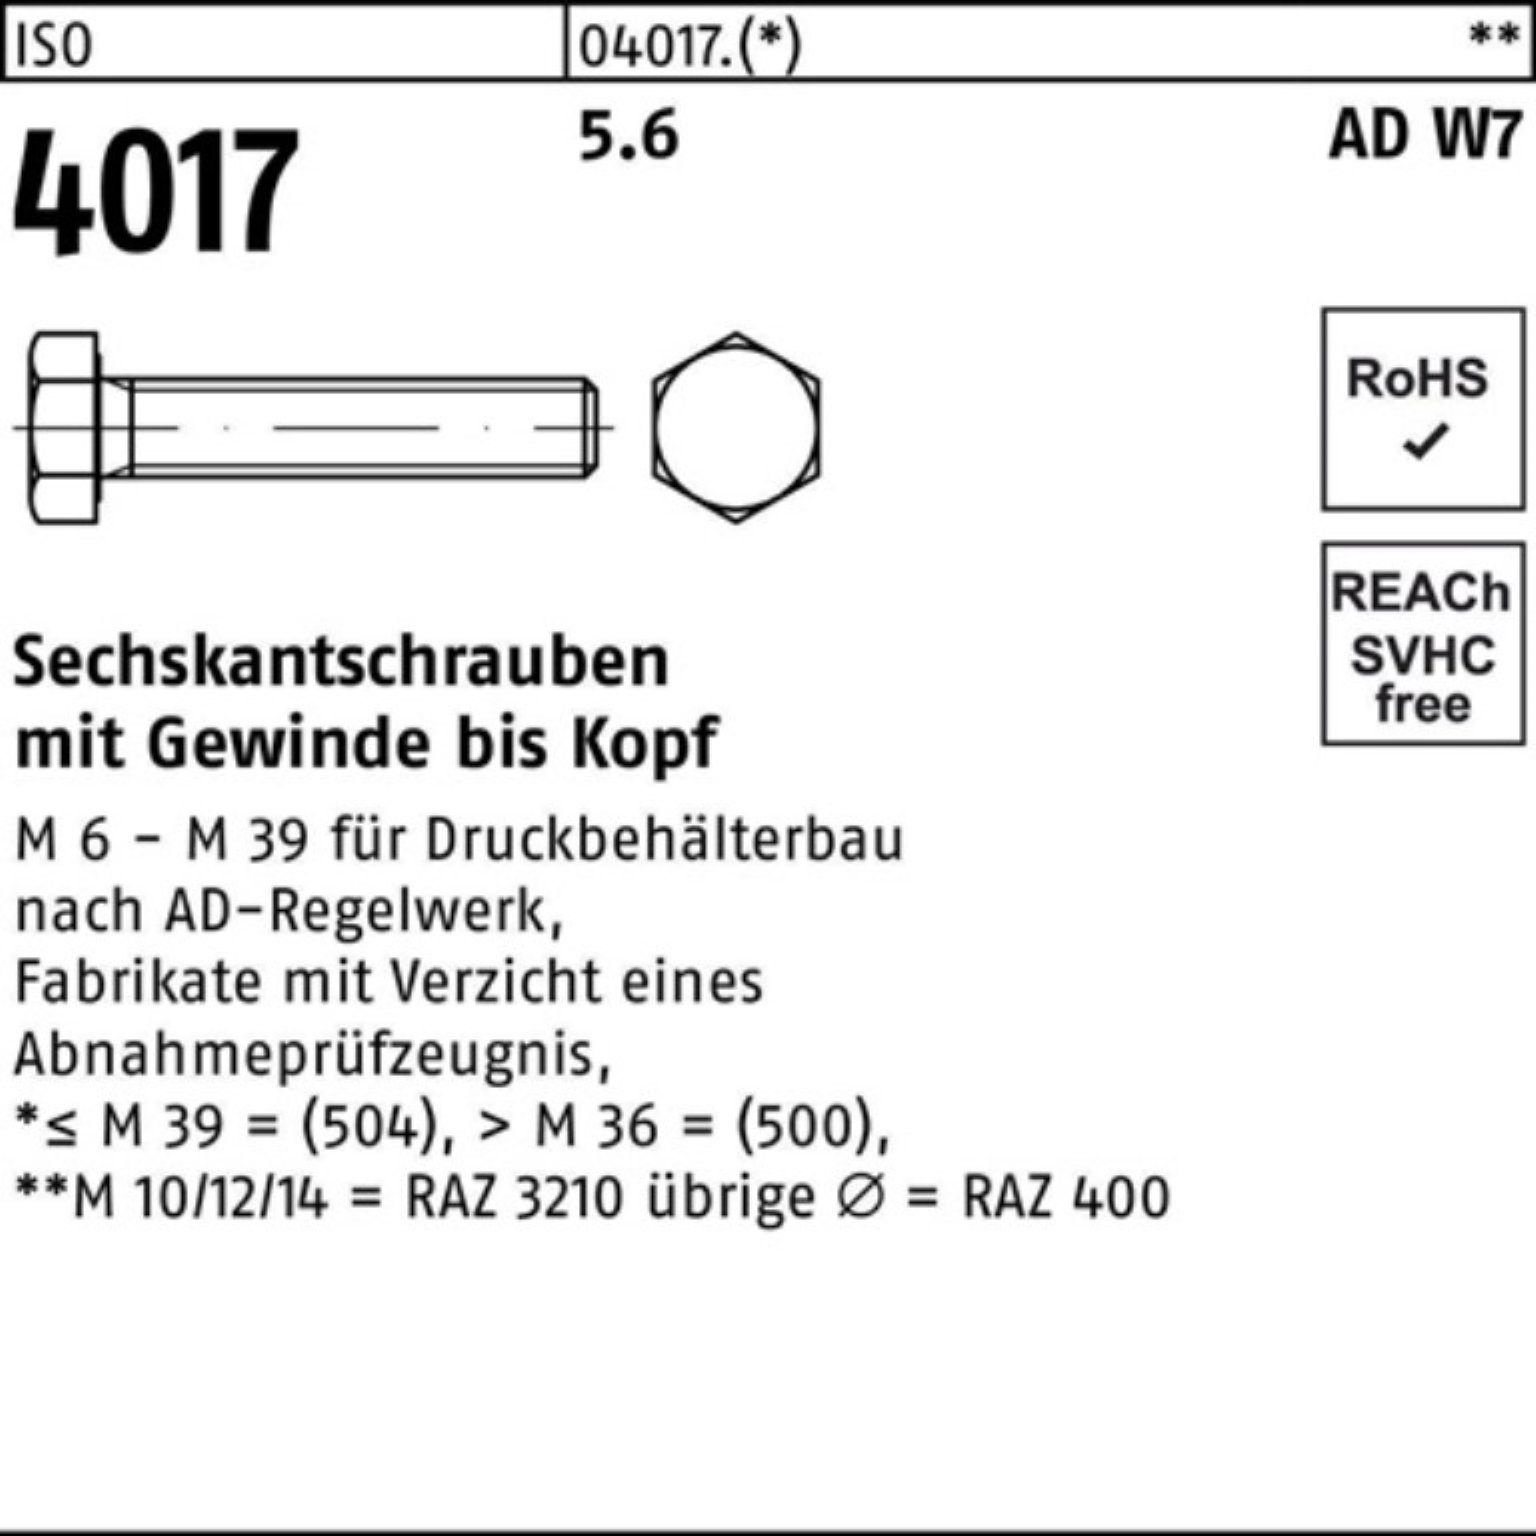 Sechskantschraube VG ISO 25 Sechskantschraube Stück 4017 100er Pack M20x 5.6 Bufab 150 AD W7